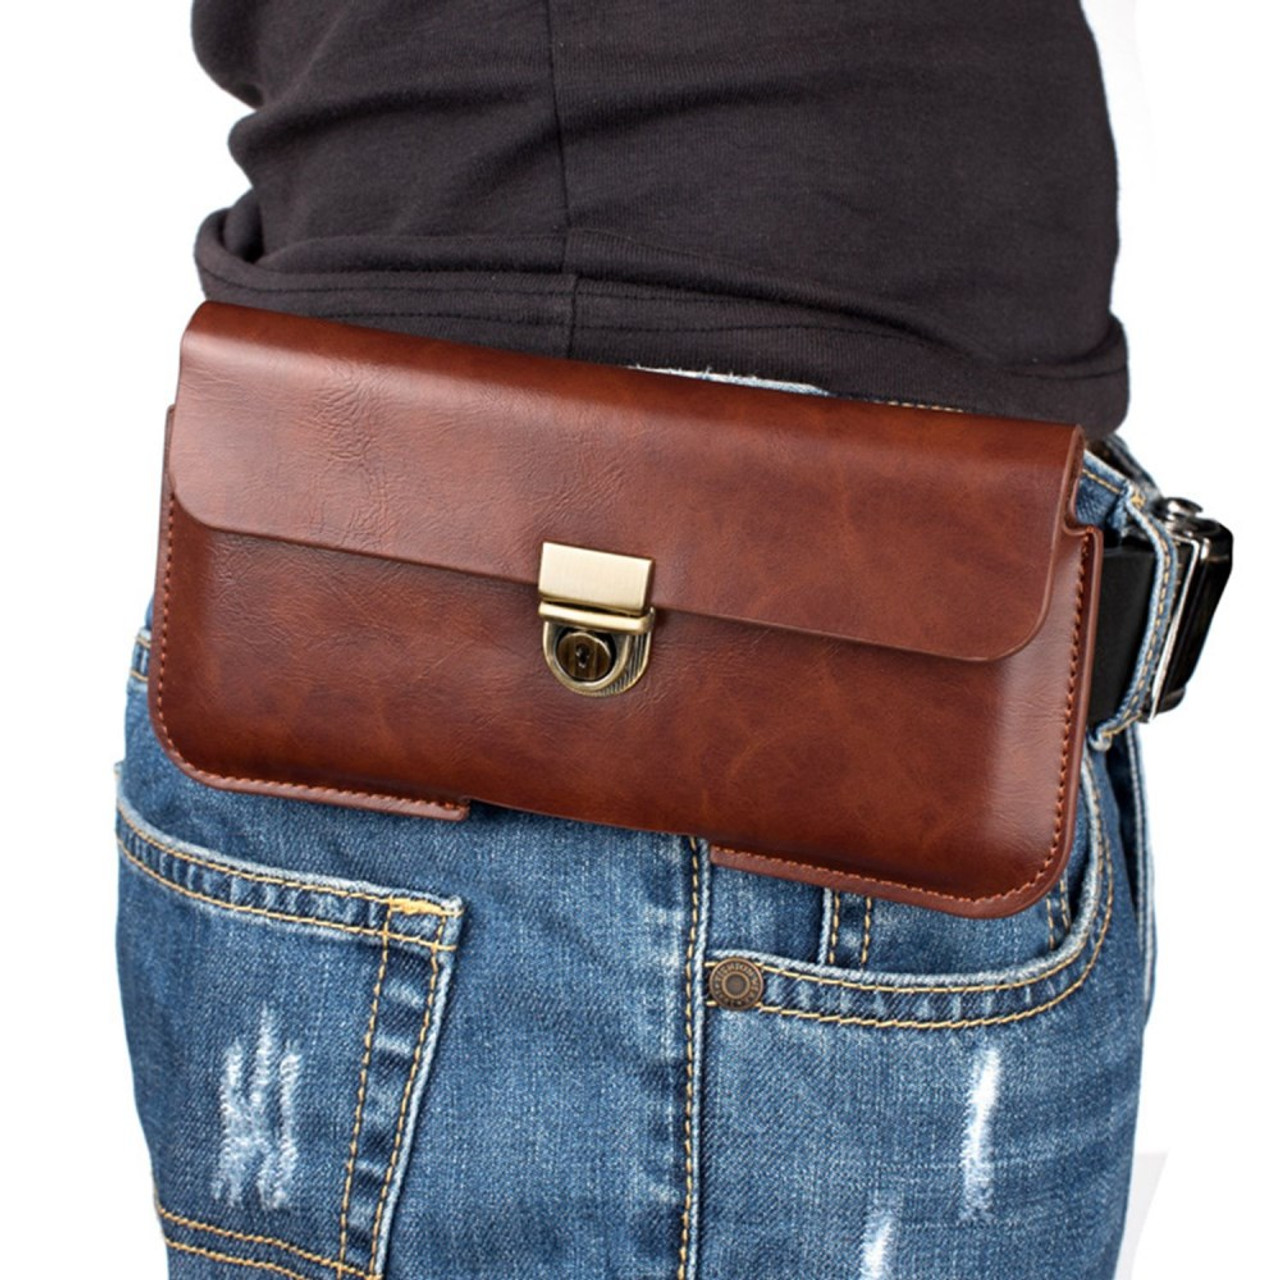 Universal Waist Bag for 4.7-inch Cell Phones Protective Bag